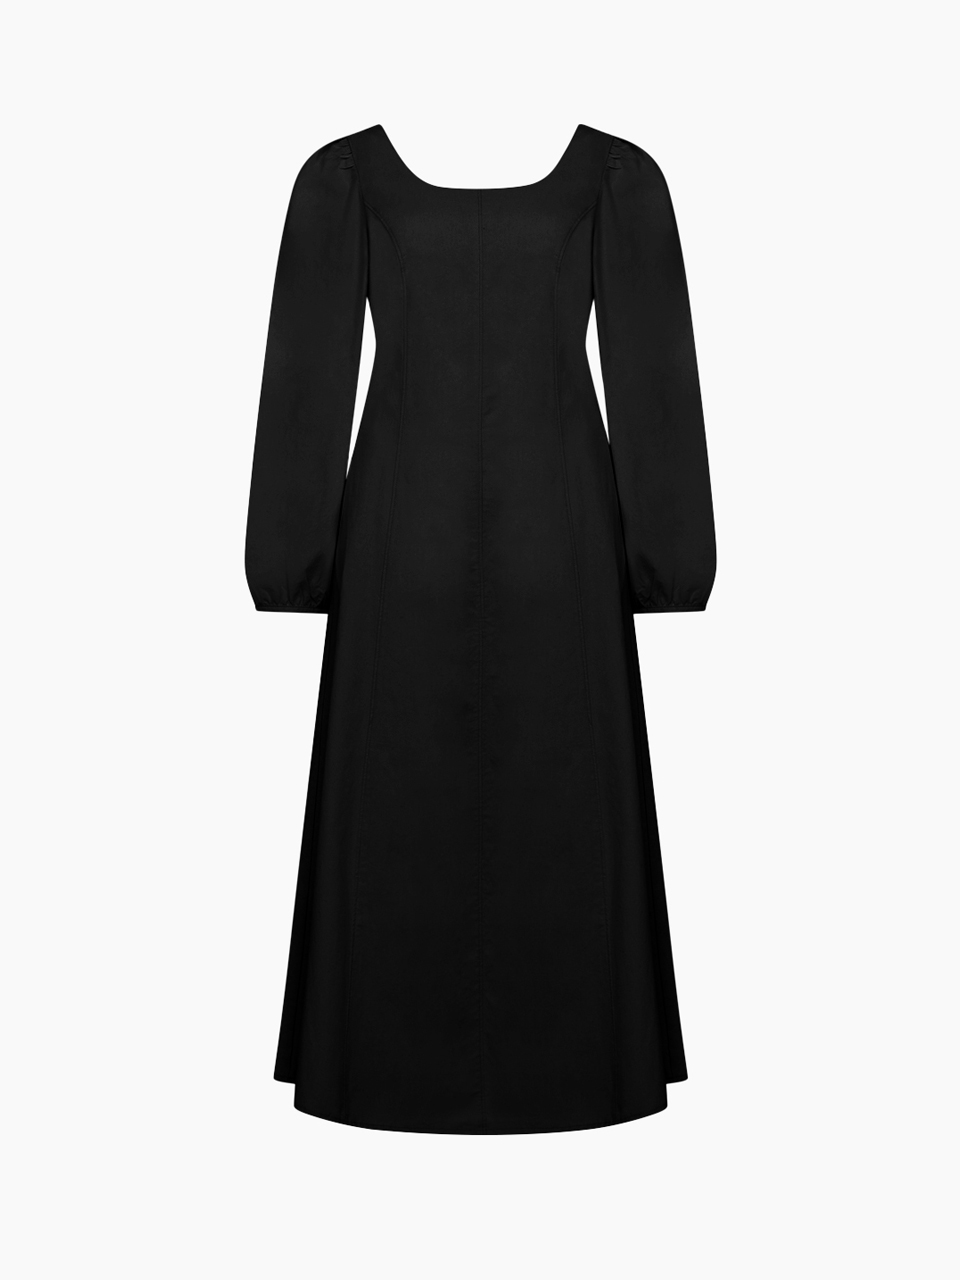 classic franc dress - black